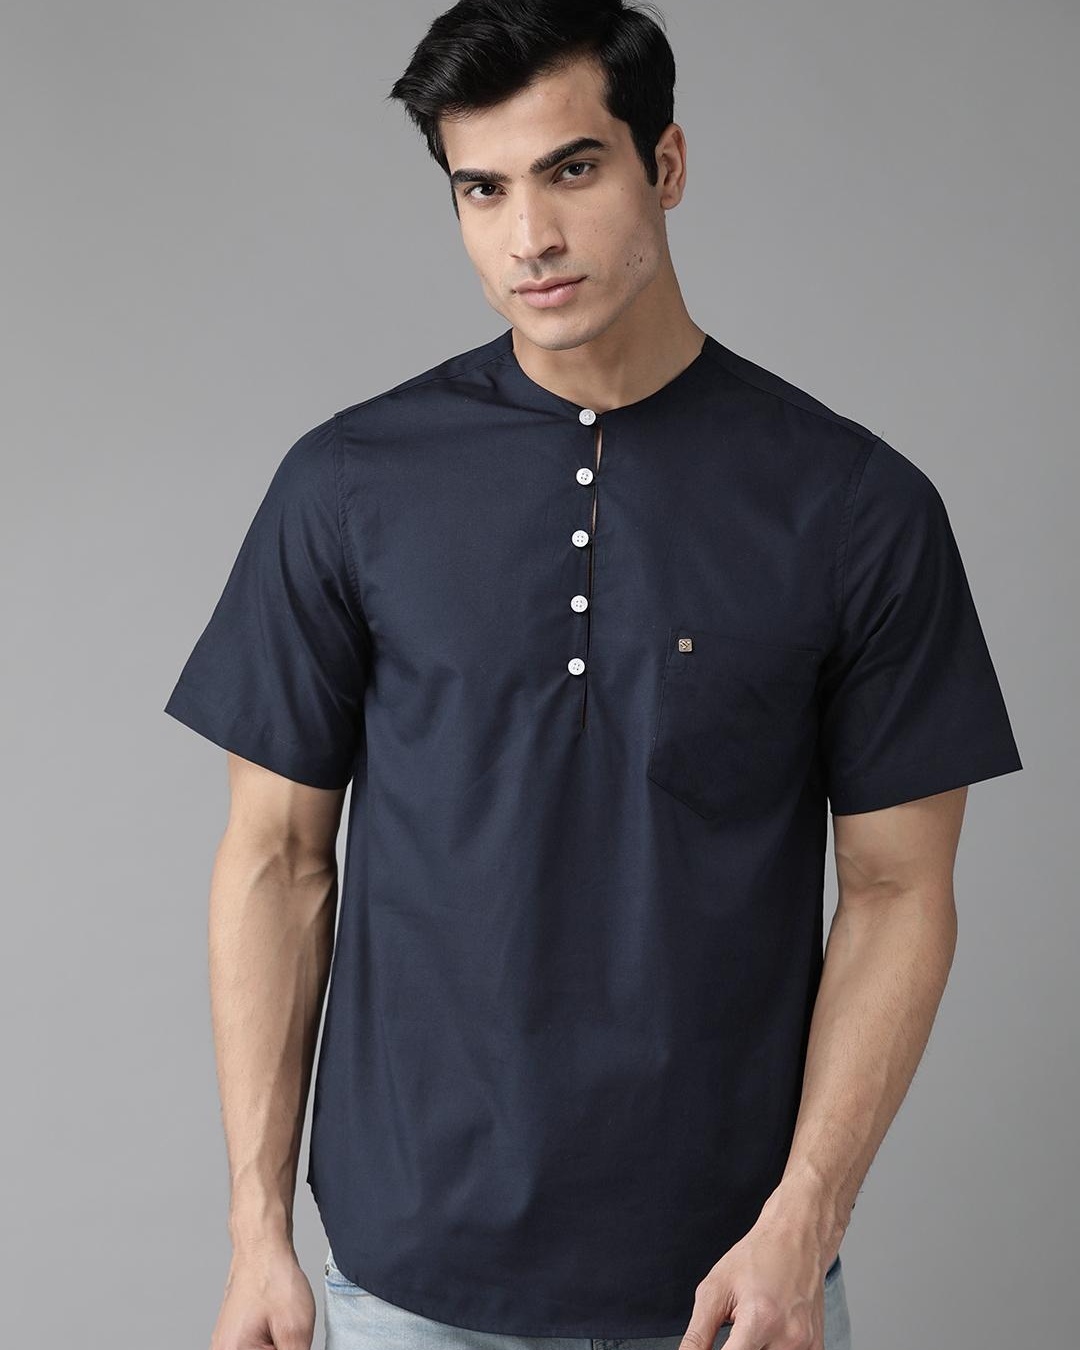 Buy Men's Blue Cotton Shirt Online at Bewakoof